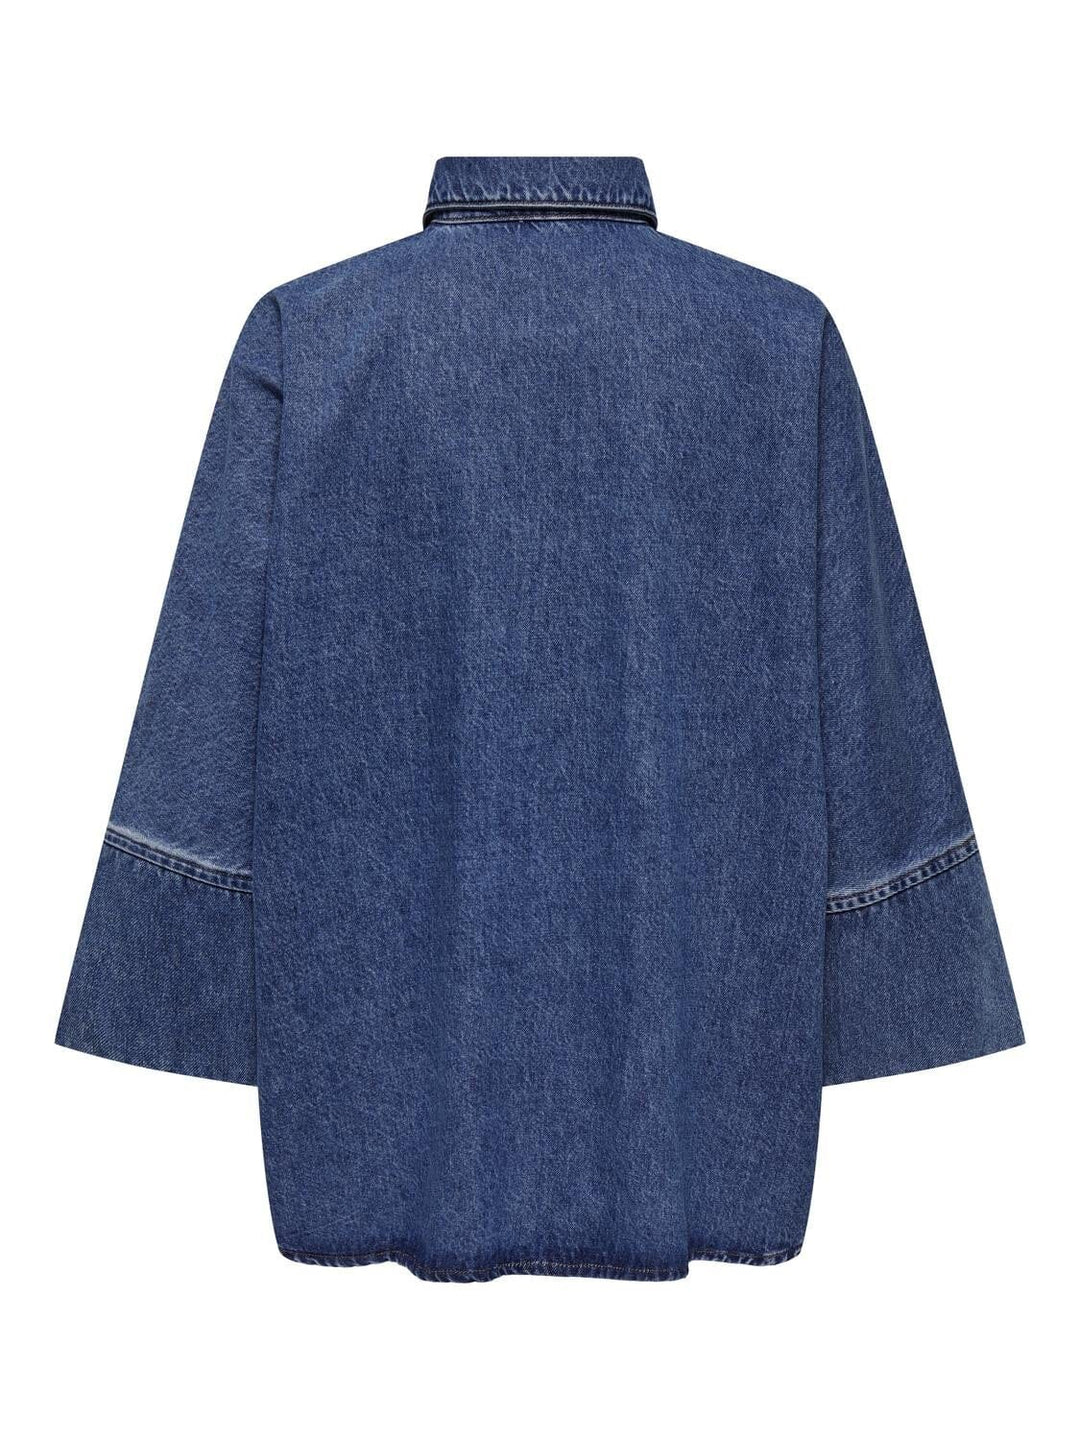 Only - Onlgrace L/S Shirt Cro - 4591551 Medium Blue Denim Skjorter 